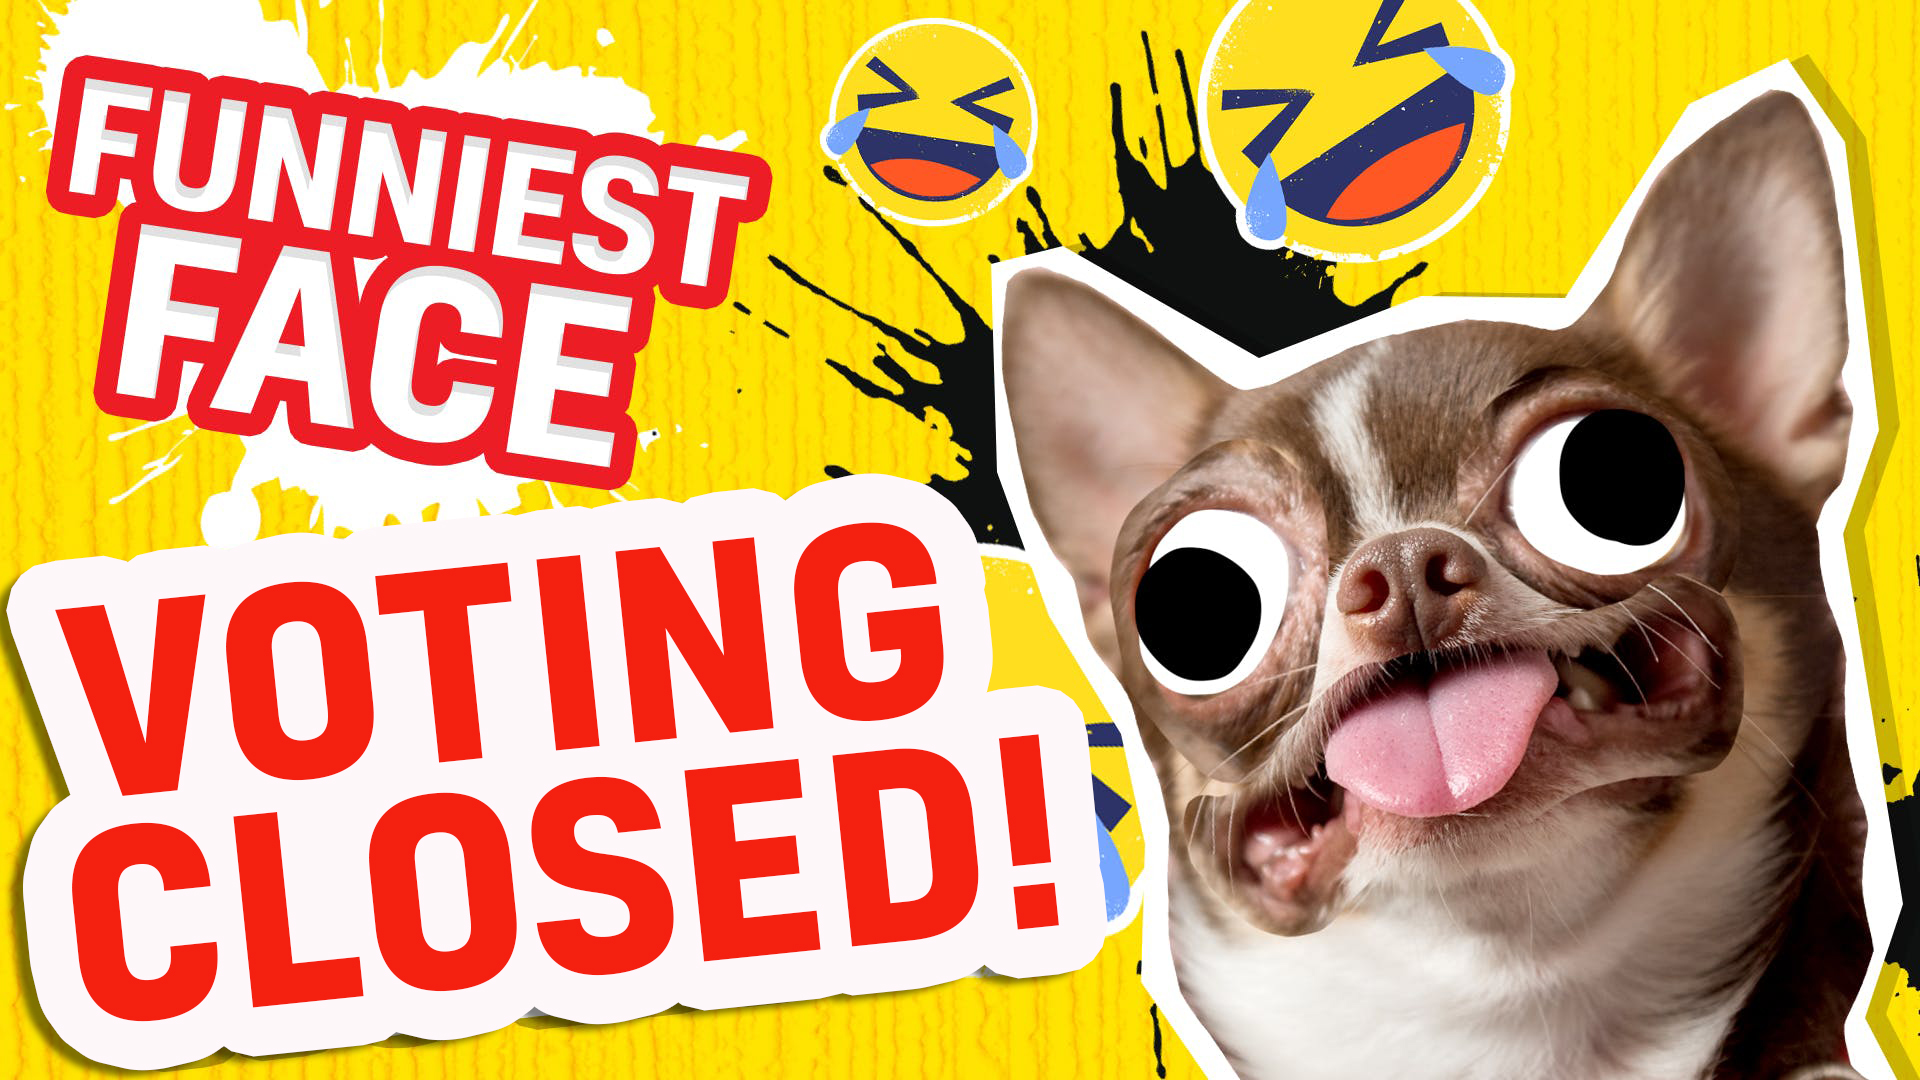 Britain’s Funniest Face - Voting Closed!